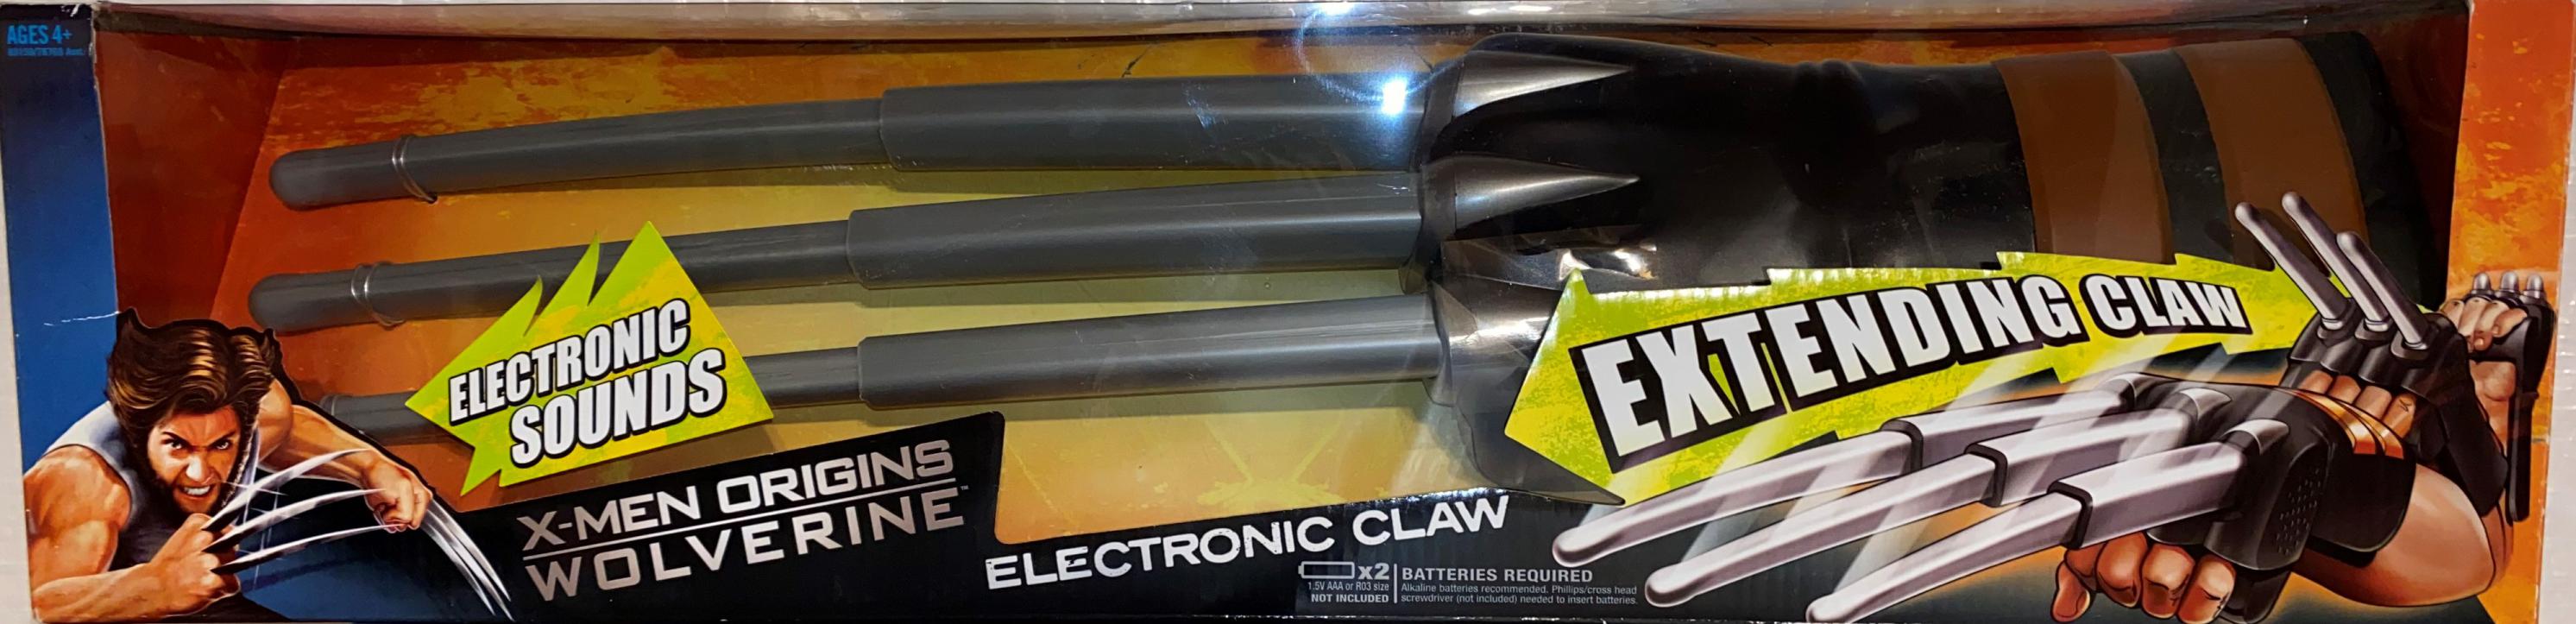 Wolverine Electronic Claw (X-Men Origins)